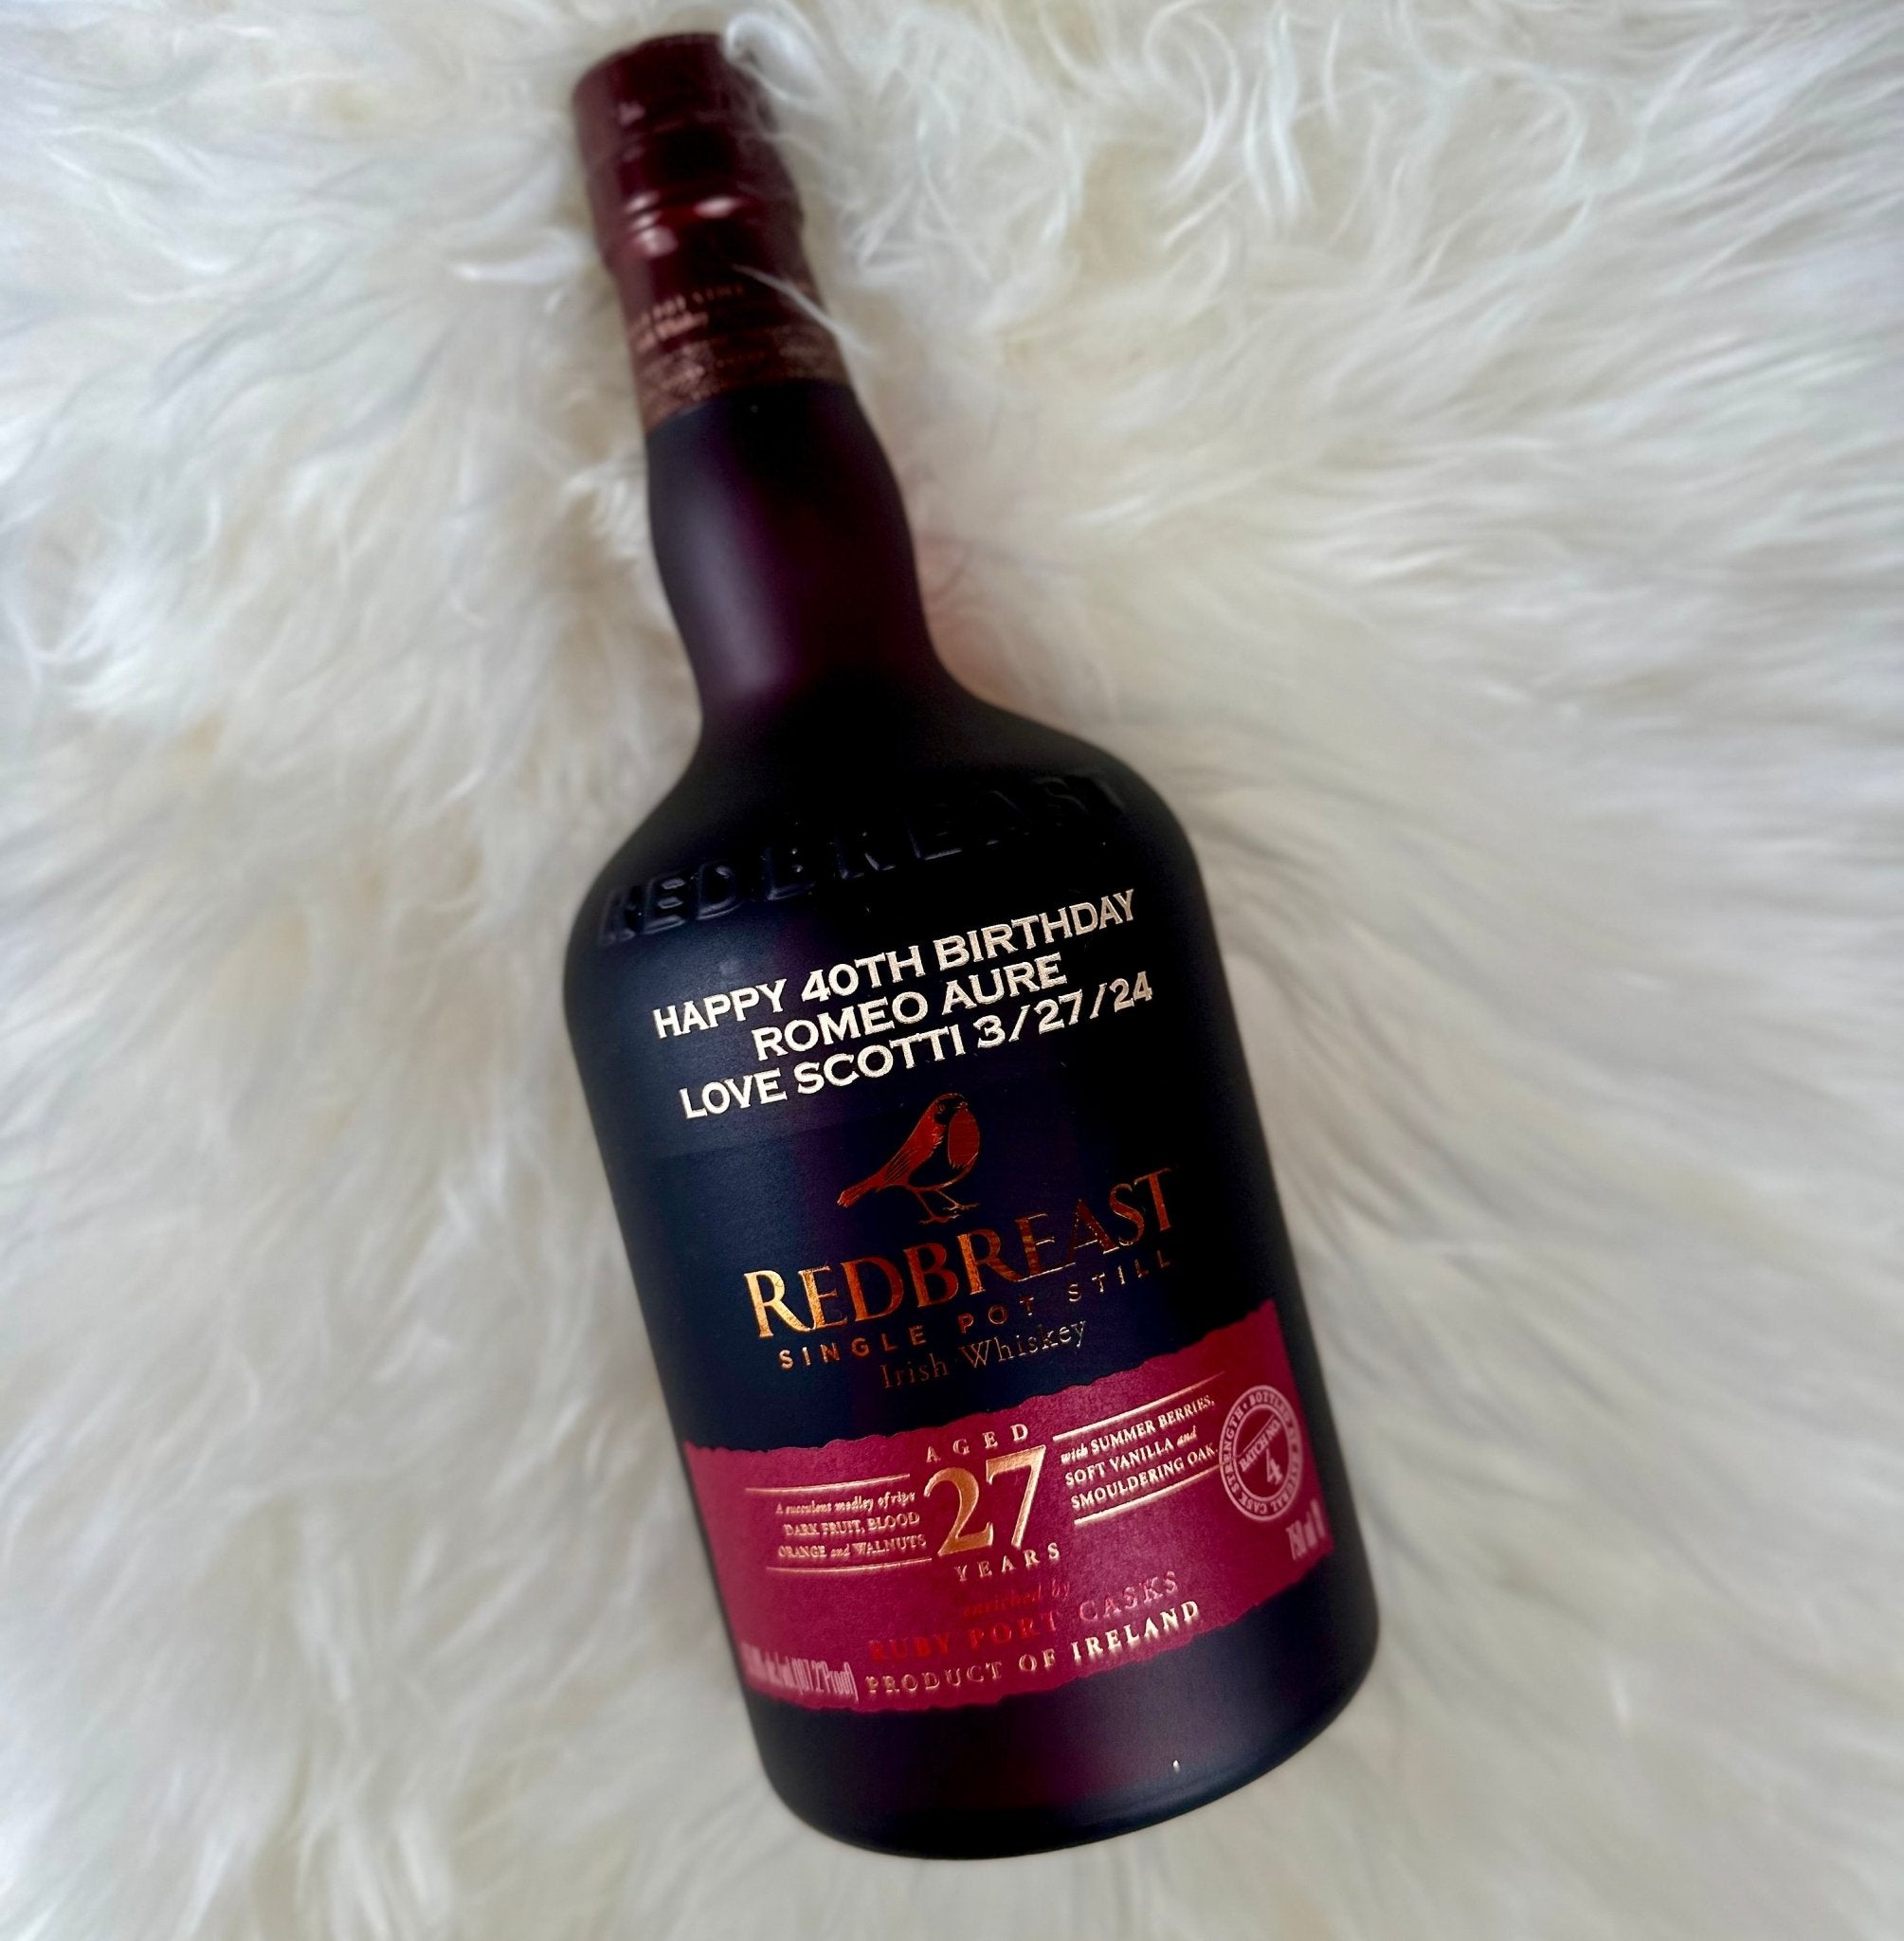 Redbreast 27 Year Old Single Pot Still Irish Whiskey - Bottle Engraving